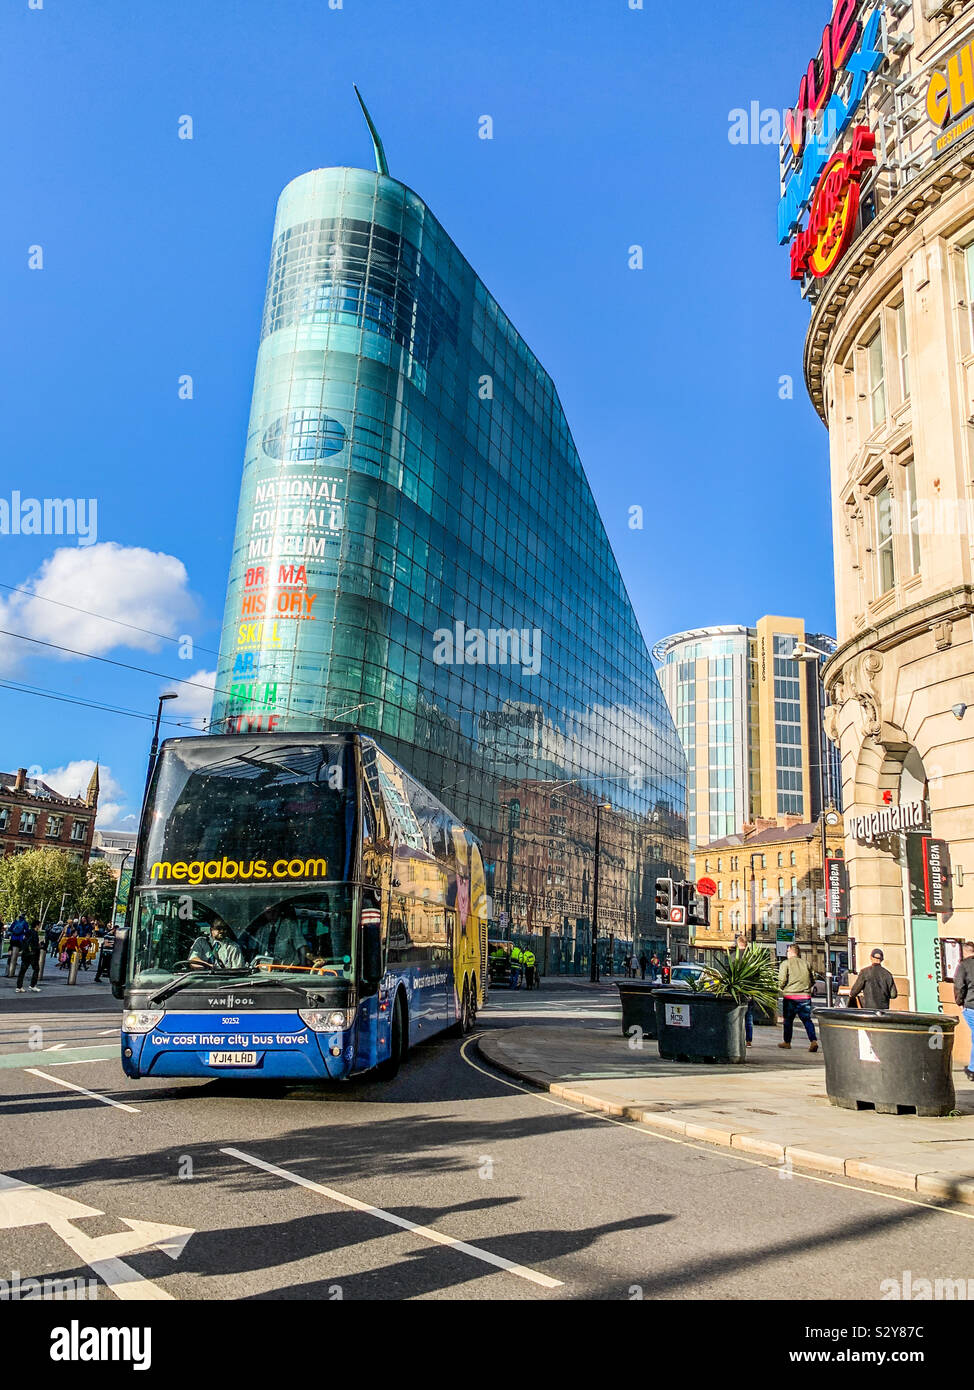 Megabus vorbei die National Football Museum in Manchester. Stockfoto